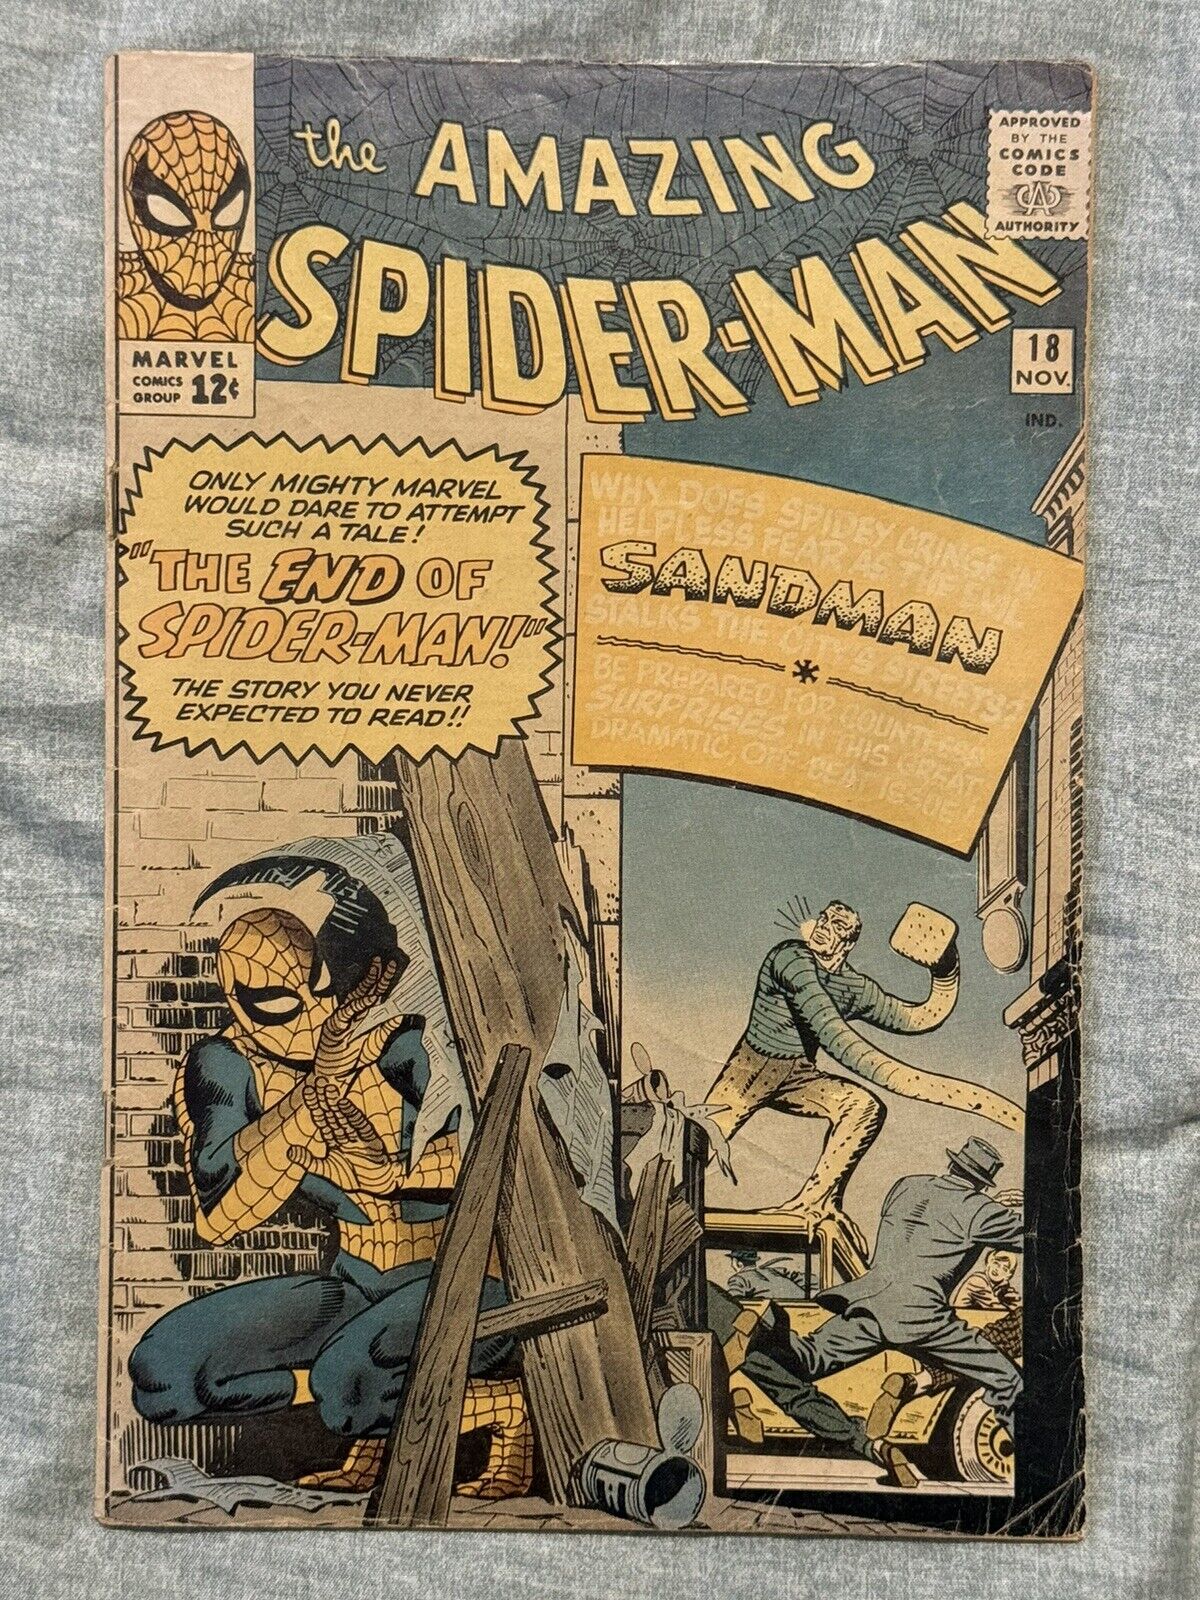 Amazing Spider-Man #18 (Marvel 1964) Key 1st Appearance Ned Leeds